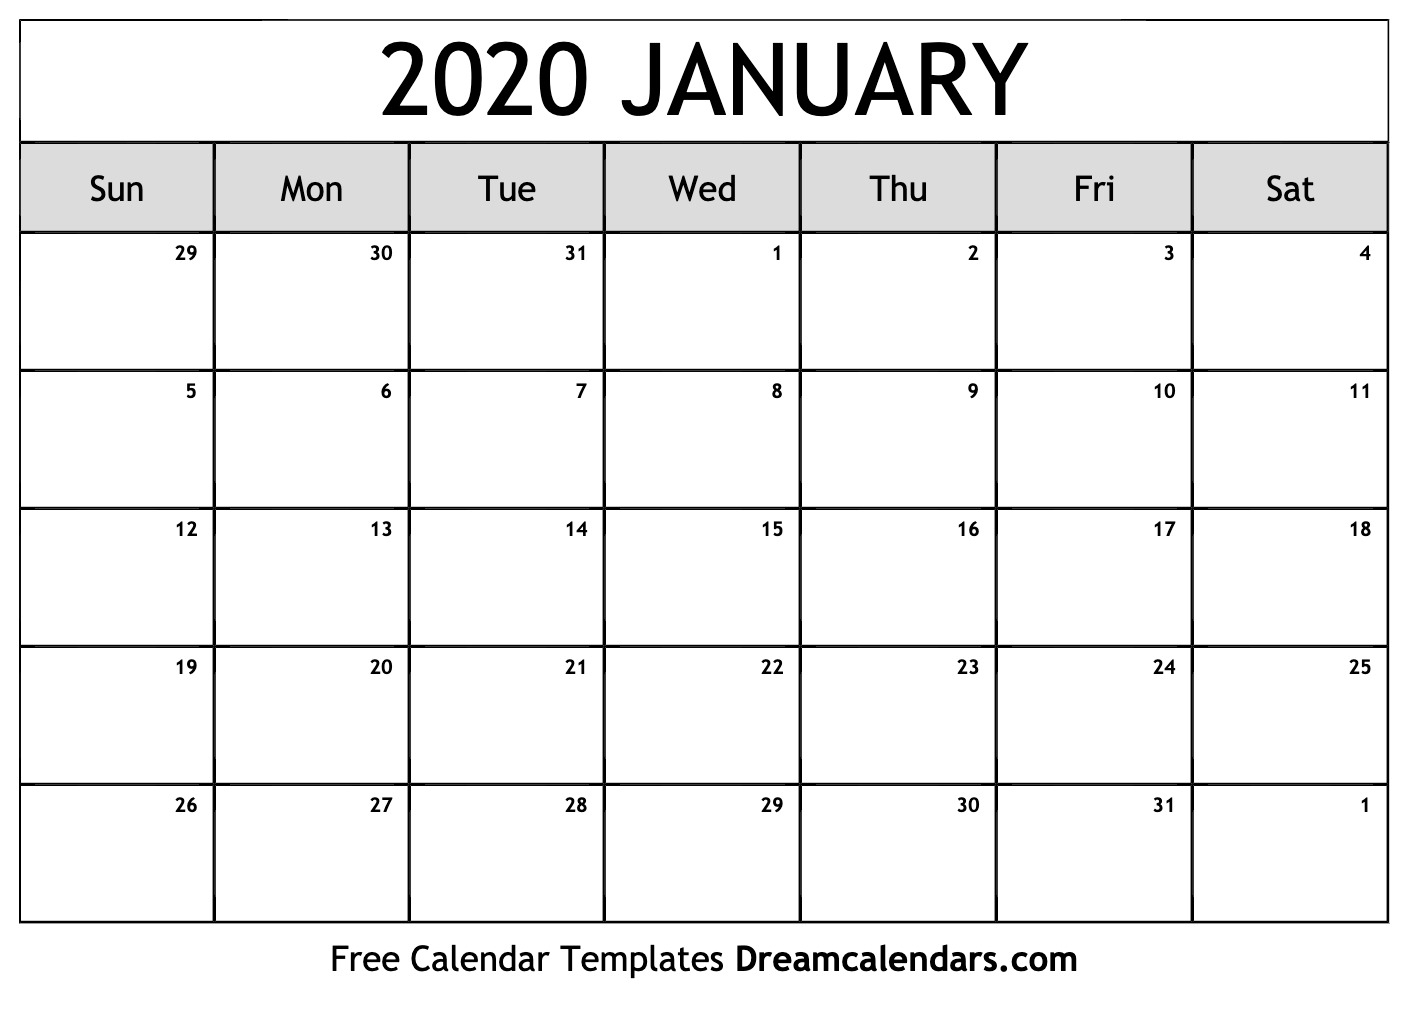 Dream Calendars - Make Your Calendar Template Blog within Free Printable Calendar 2020 Motivational